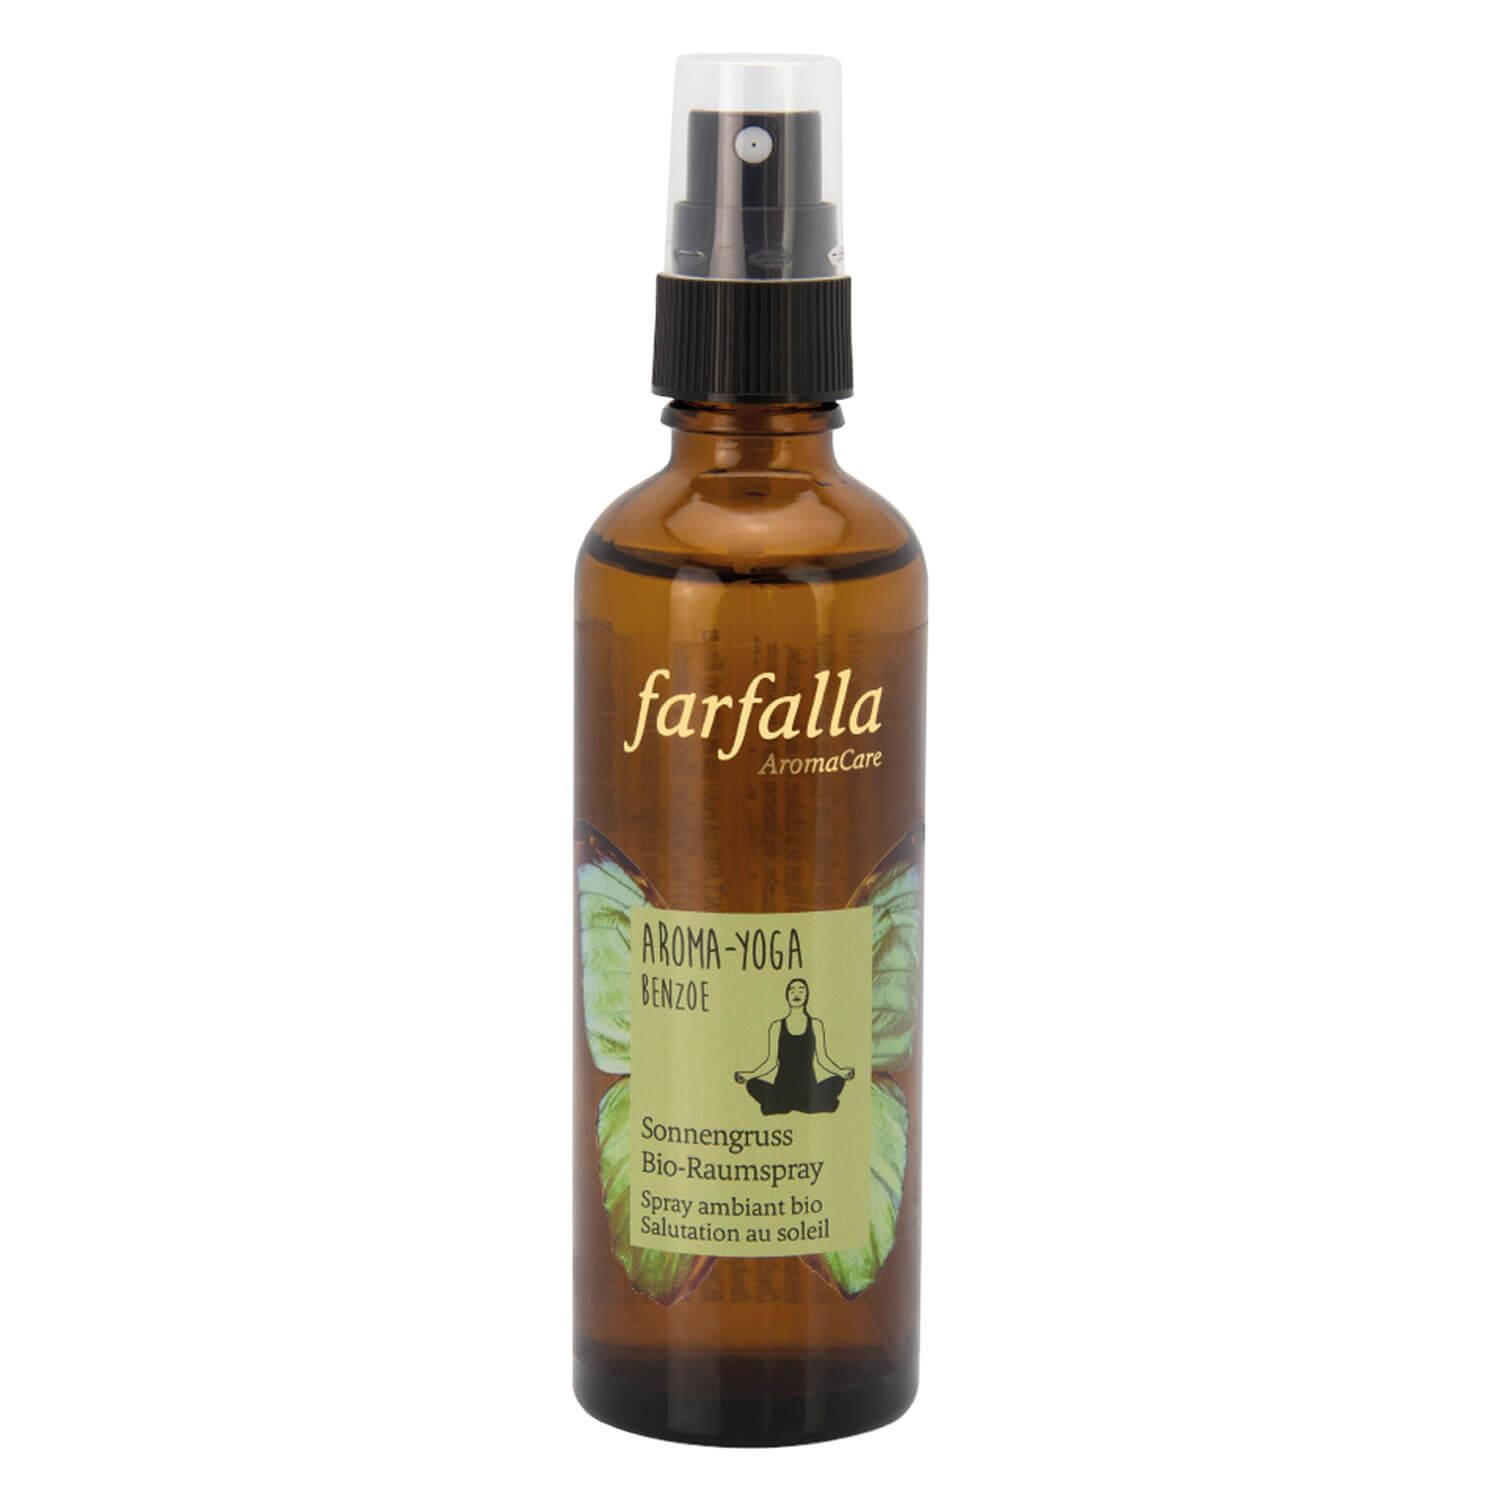 Farfalla Aroma-Yoga - Aroma-Yoga - Benzoe Spray ambiant bio Salutation au soleil